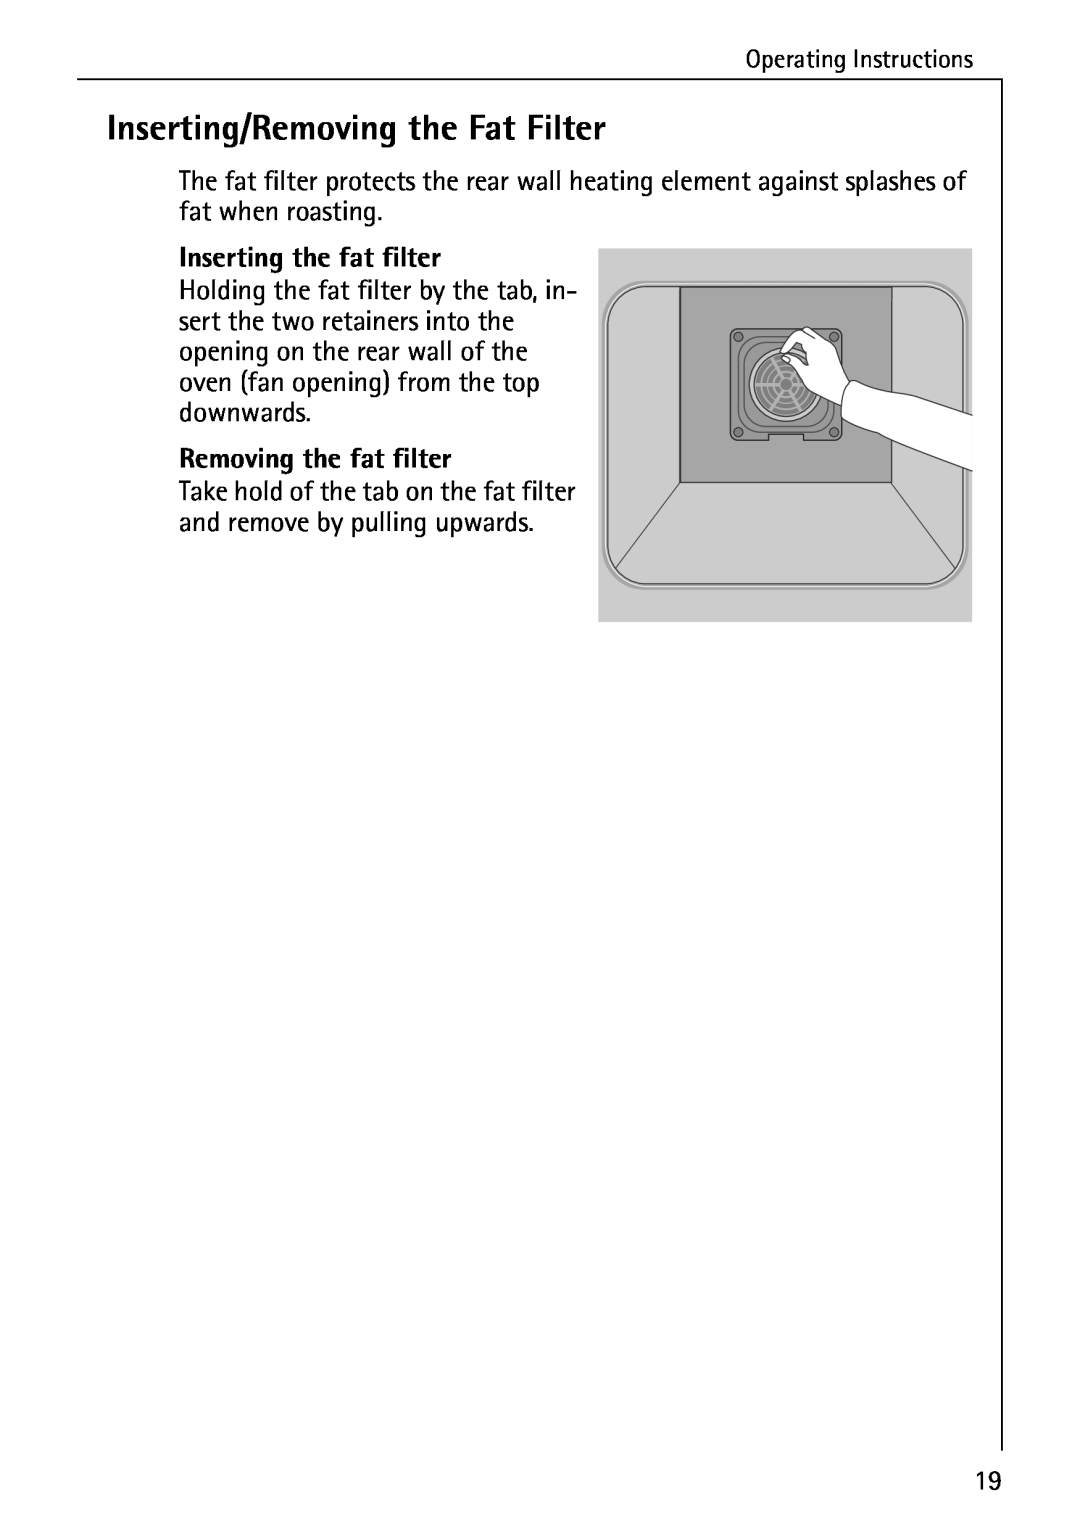 AEG E4100-1 manual Inserting/Removing the Fat Filter, Inserting the fat filter, Removing the fat filter 